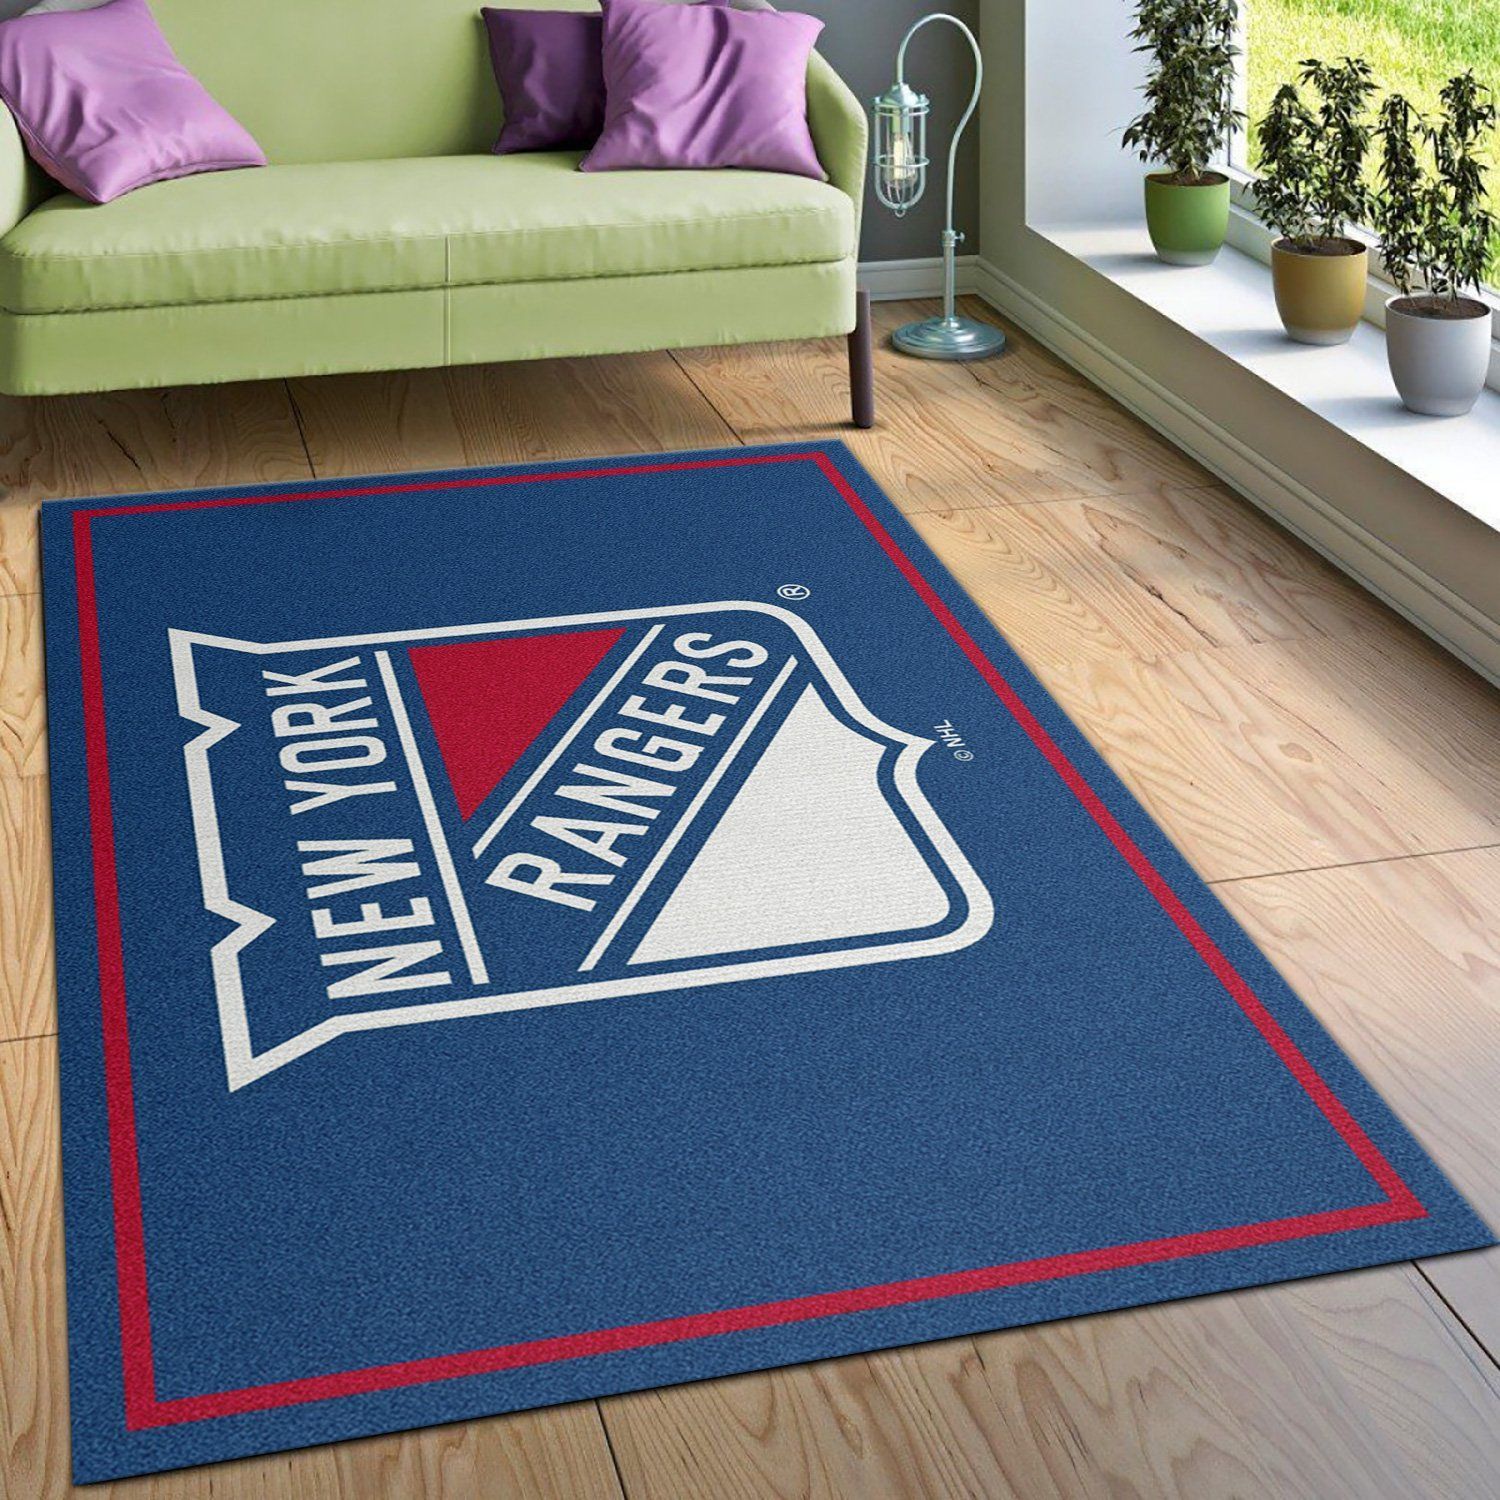 Nhl Spirit New York Rangers Area Rug Carpet, Living Room Rug, Family Gift US Decor - Indoor Outdoor Rugs 3